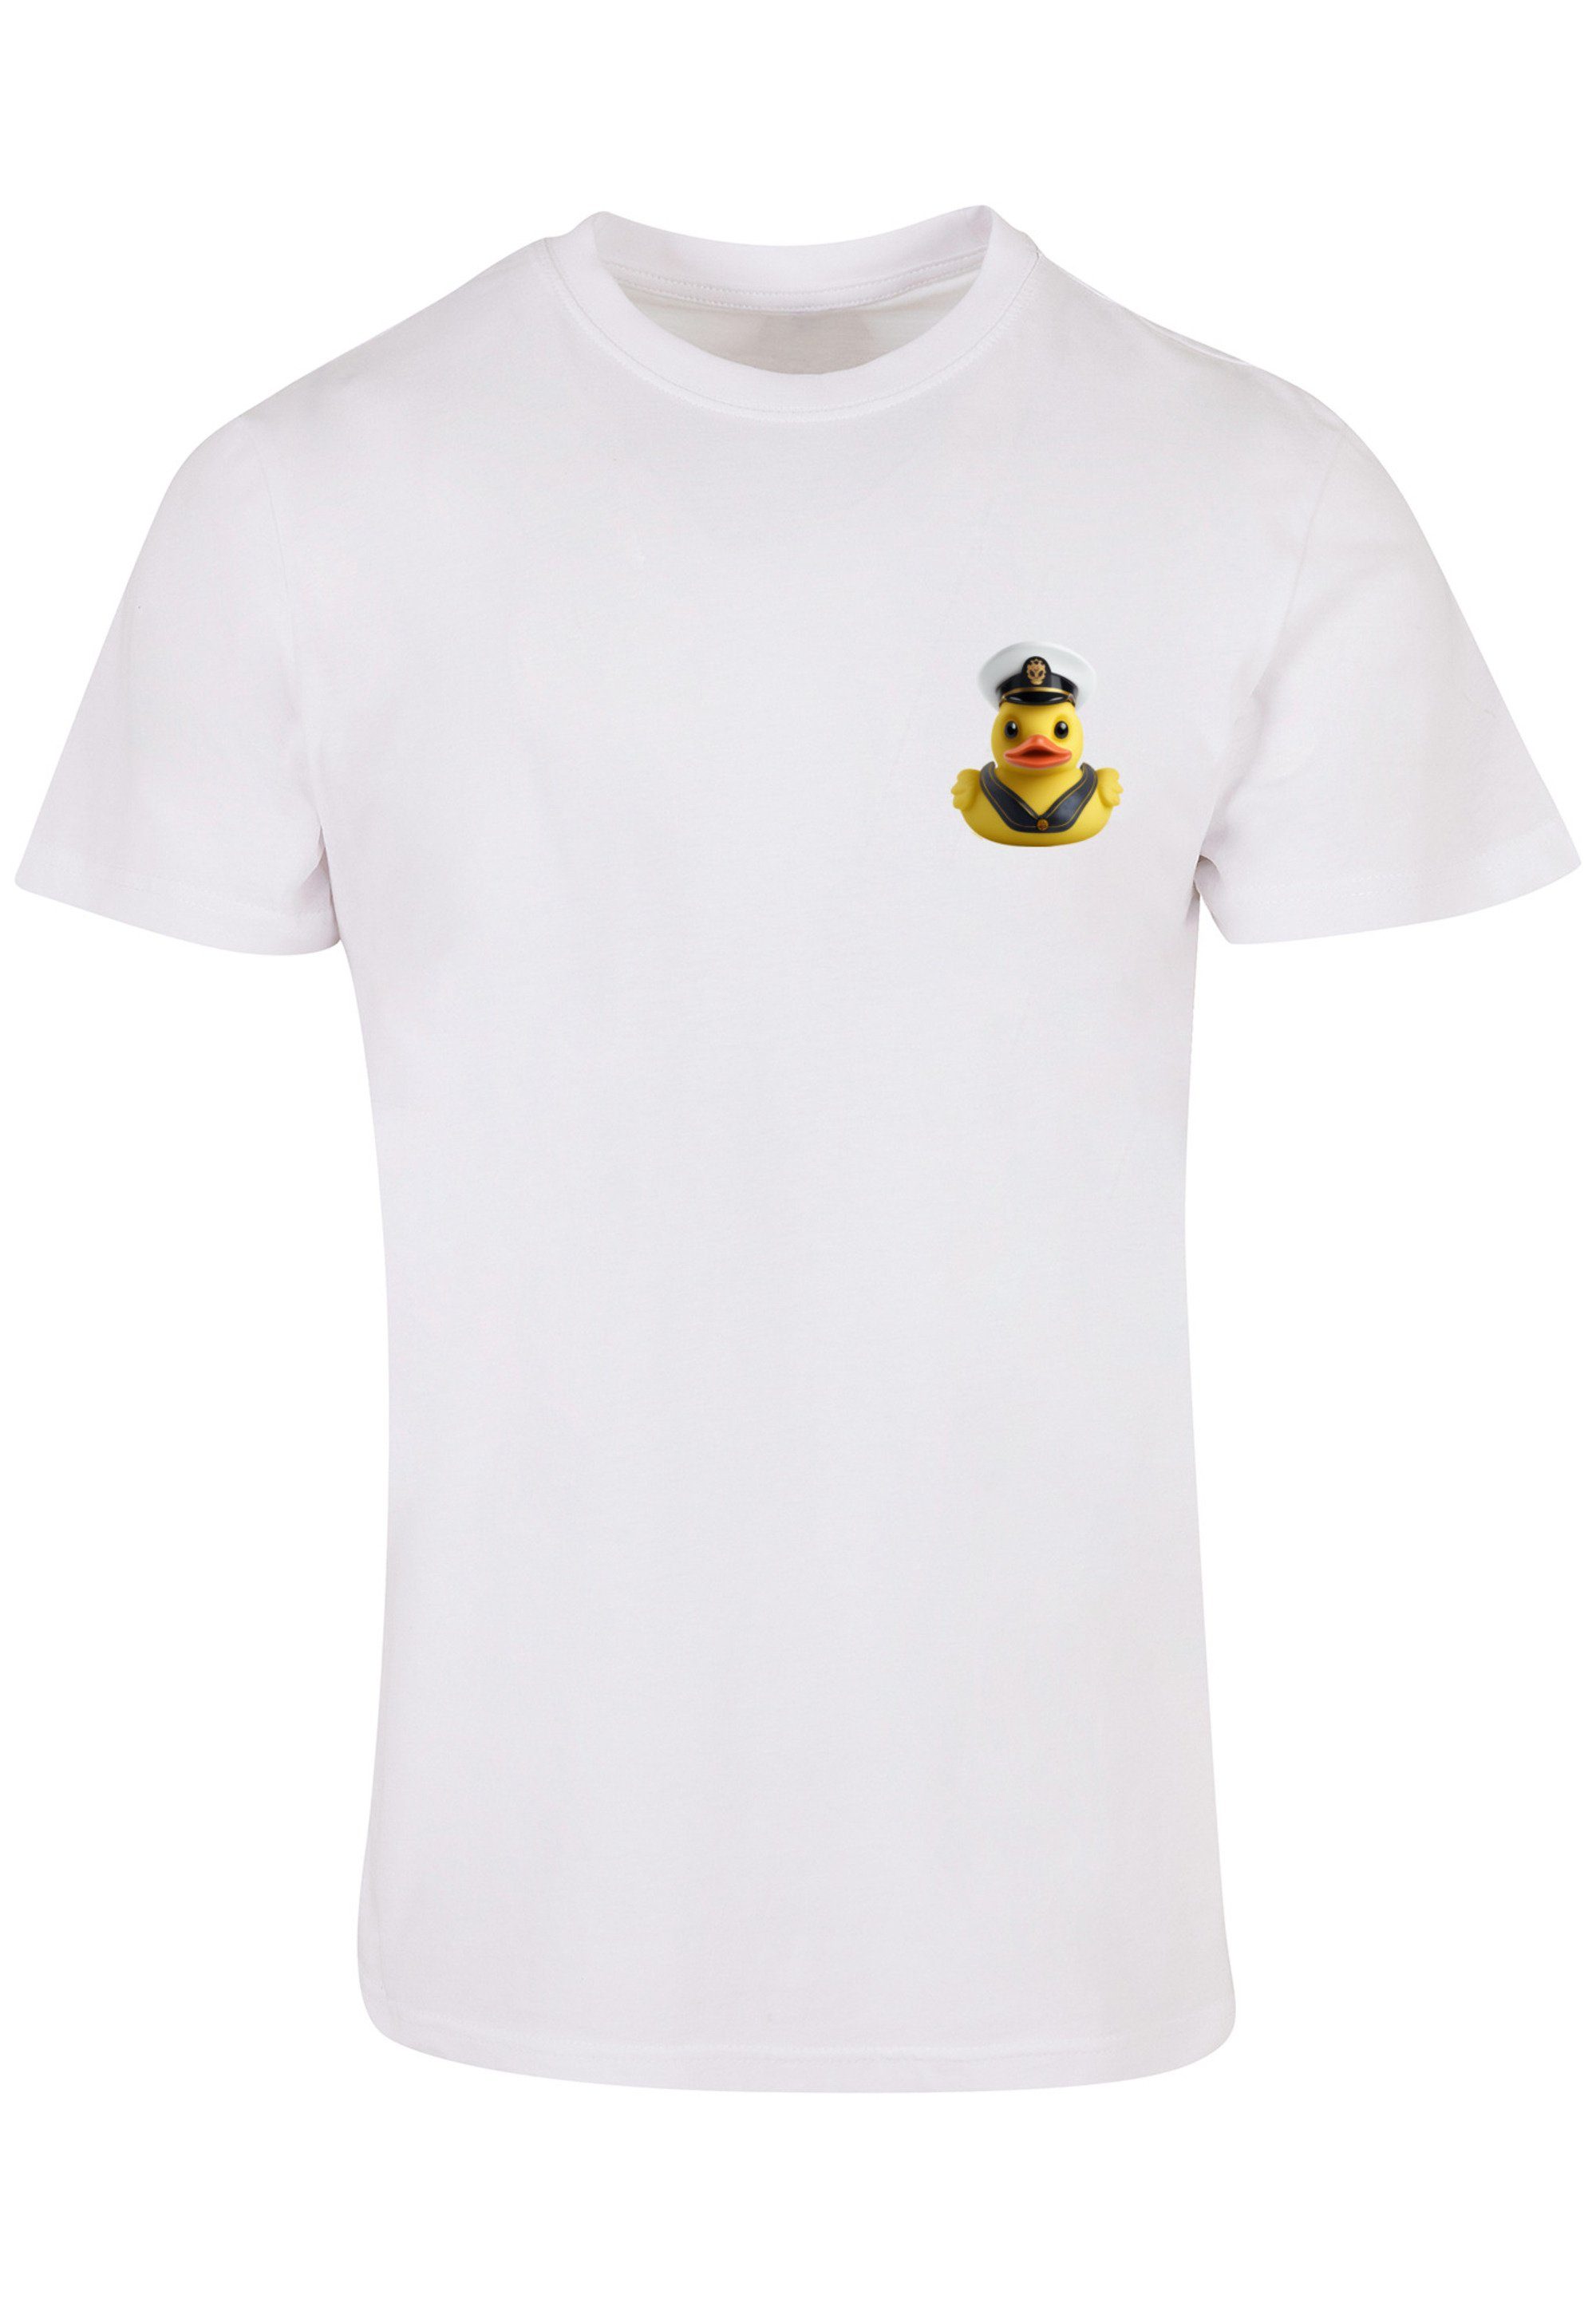 F4NT4STIC T-Shirt Rubber Duck Print Captain TEE weiß UNISEX